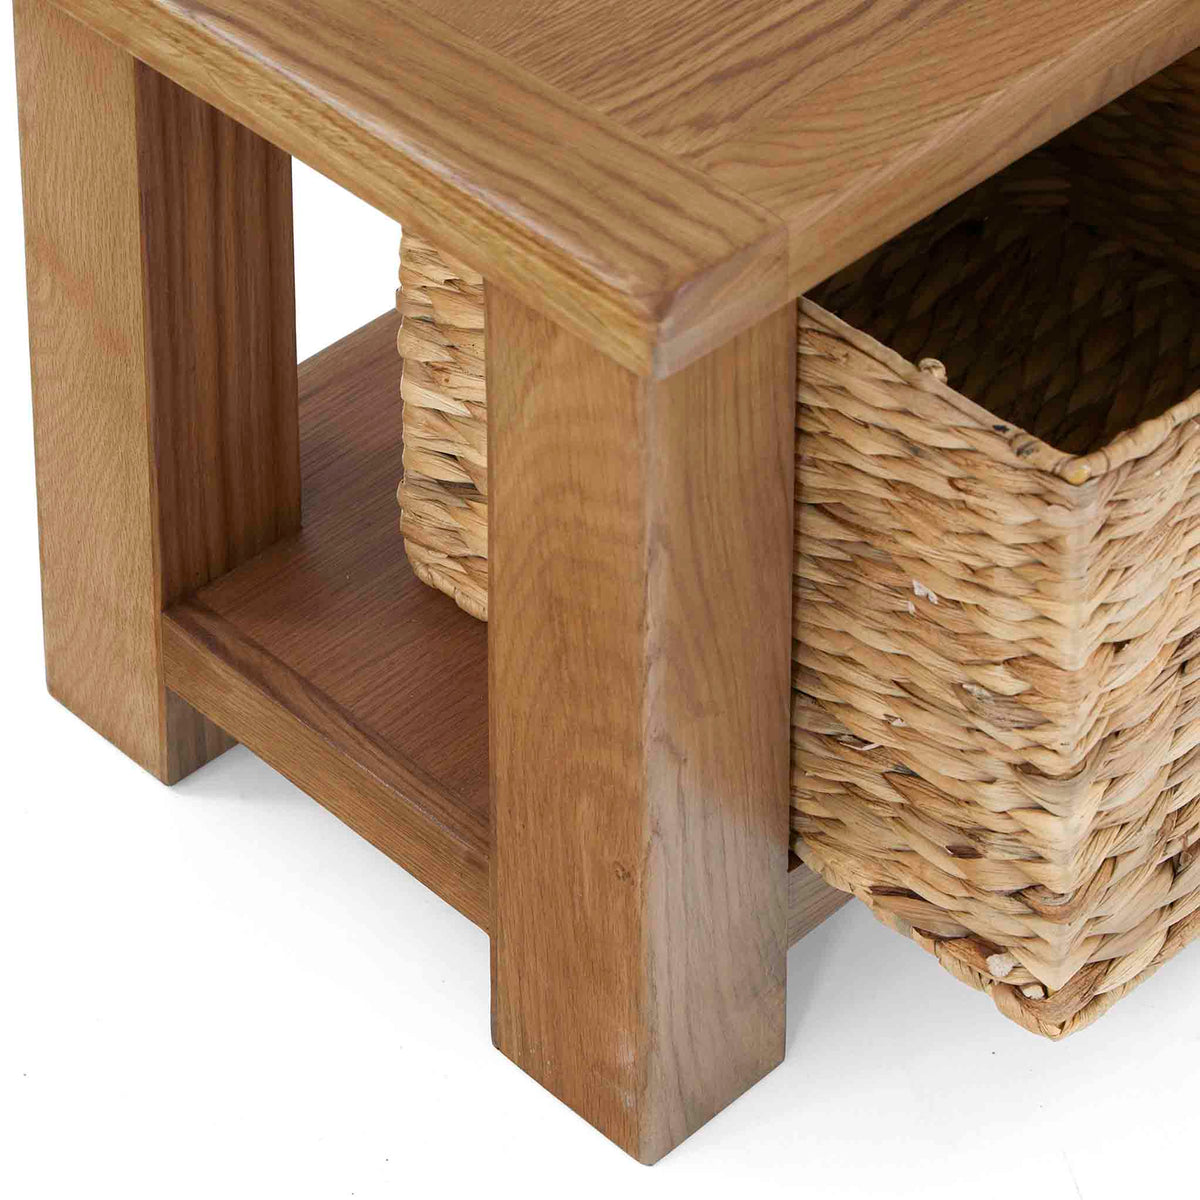 Zelah Oak Bench with Baskets - Bench end